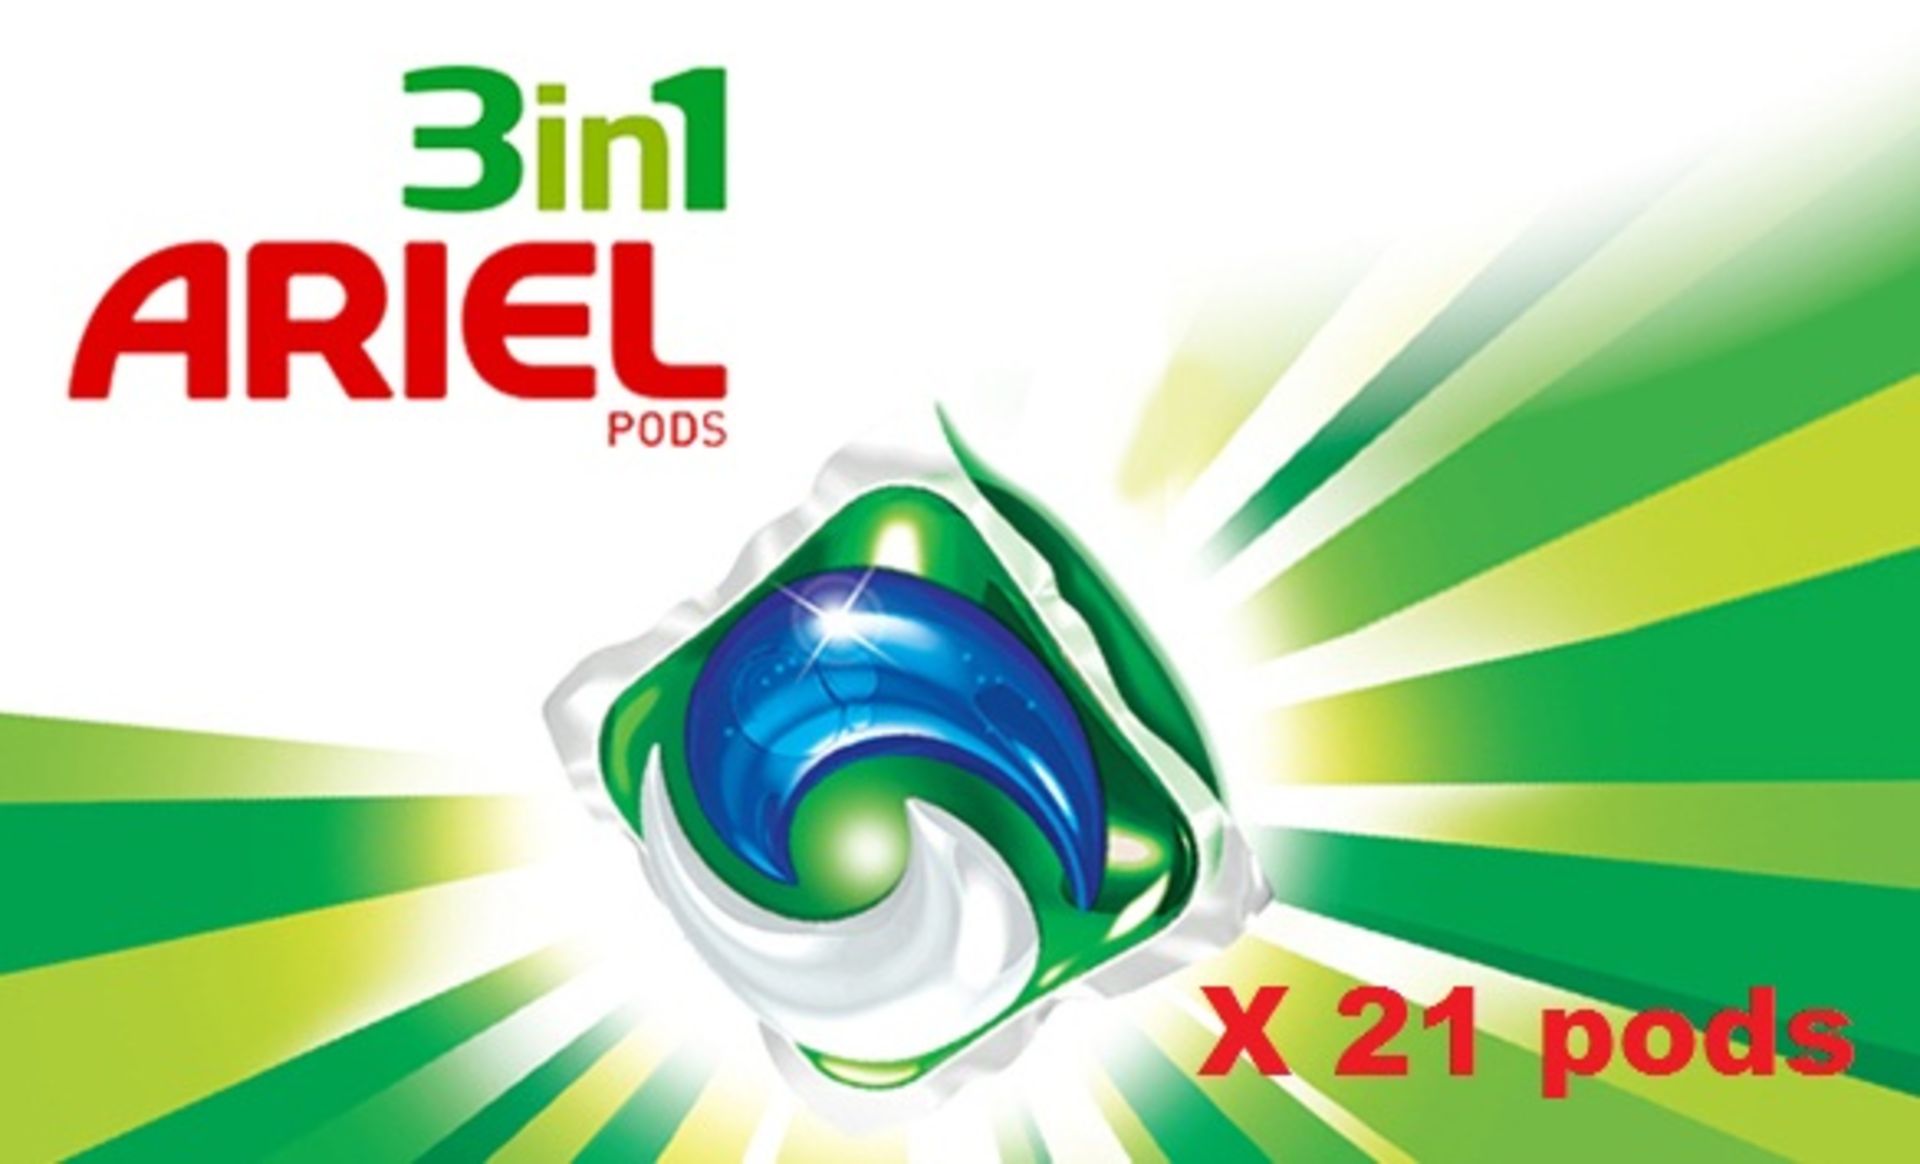 V Brand New 21 Ariel 3-in-1 Pods Laundry Detergent